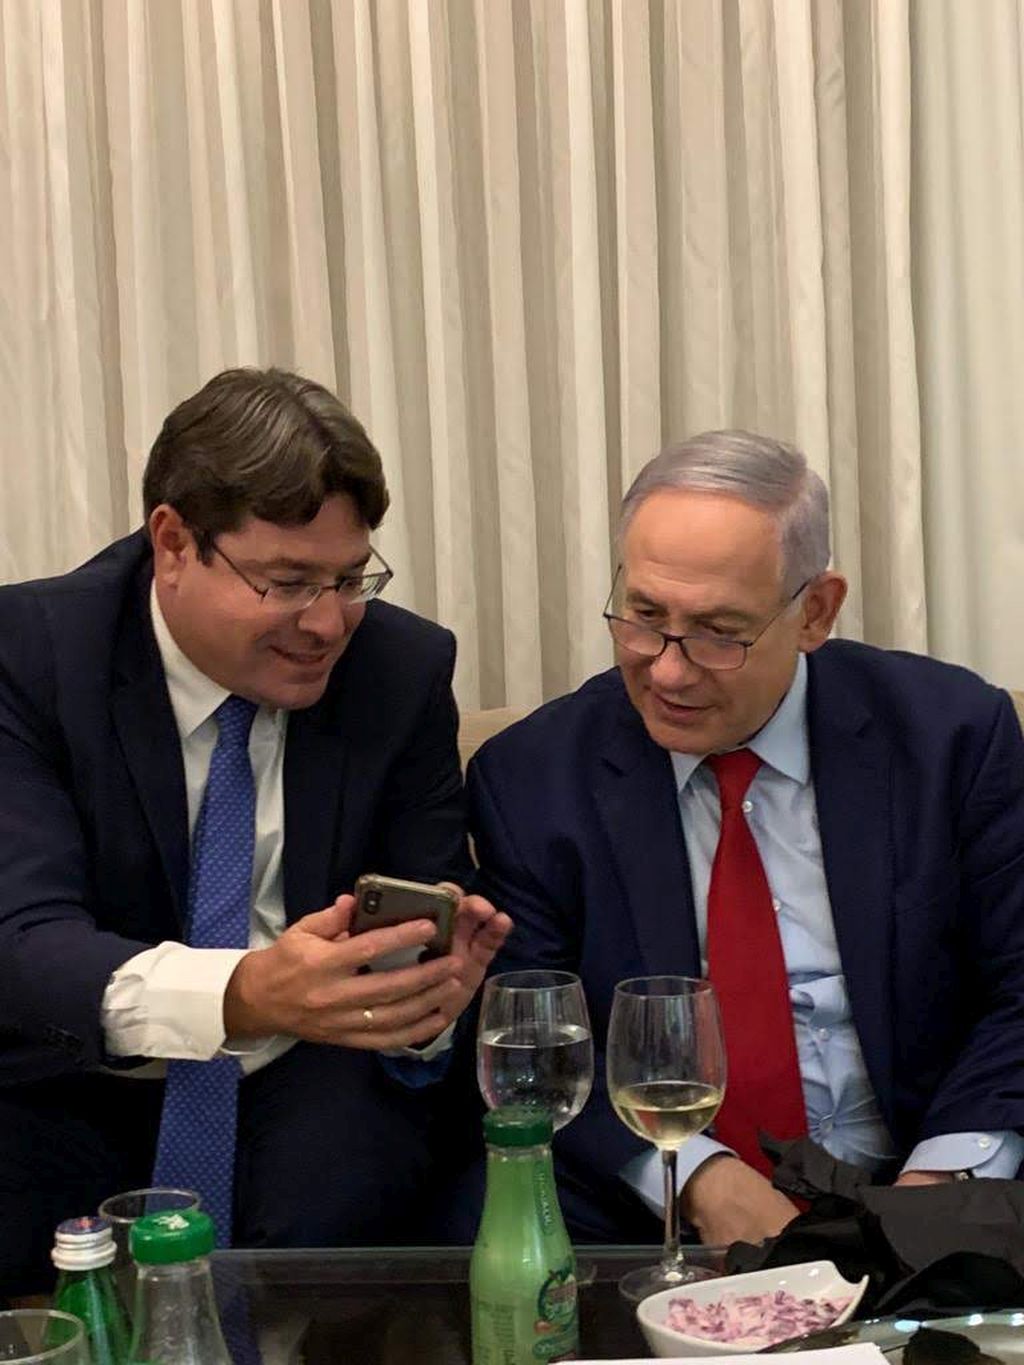 Akunis con el PM Netanyahu